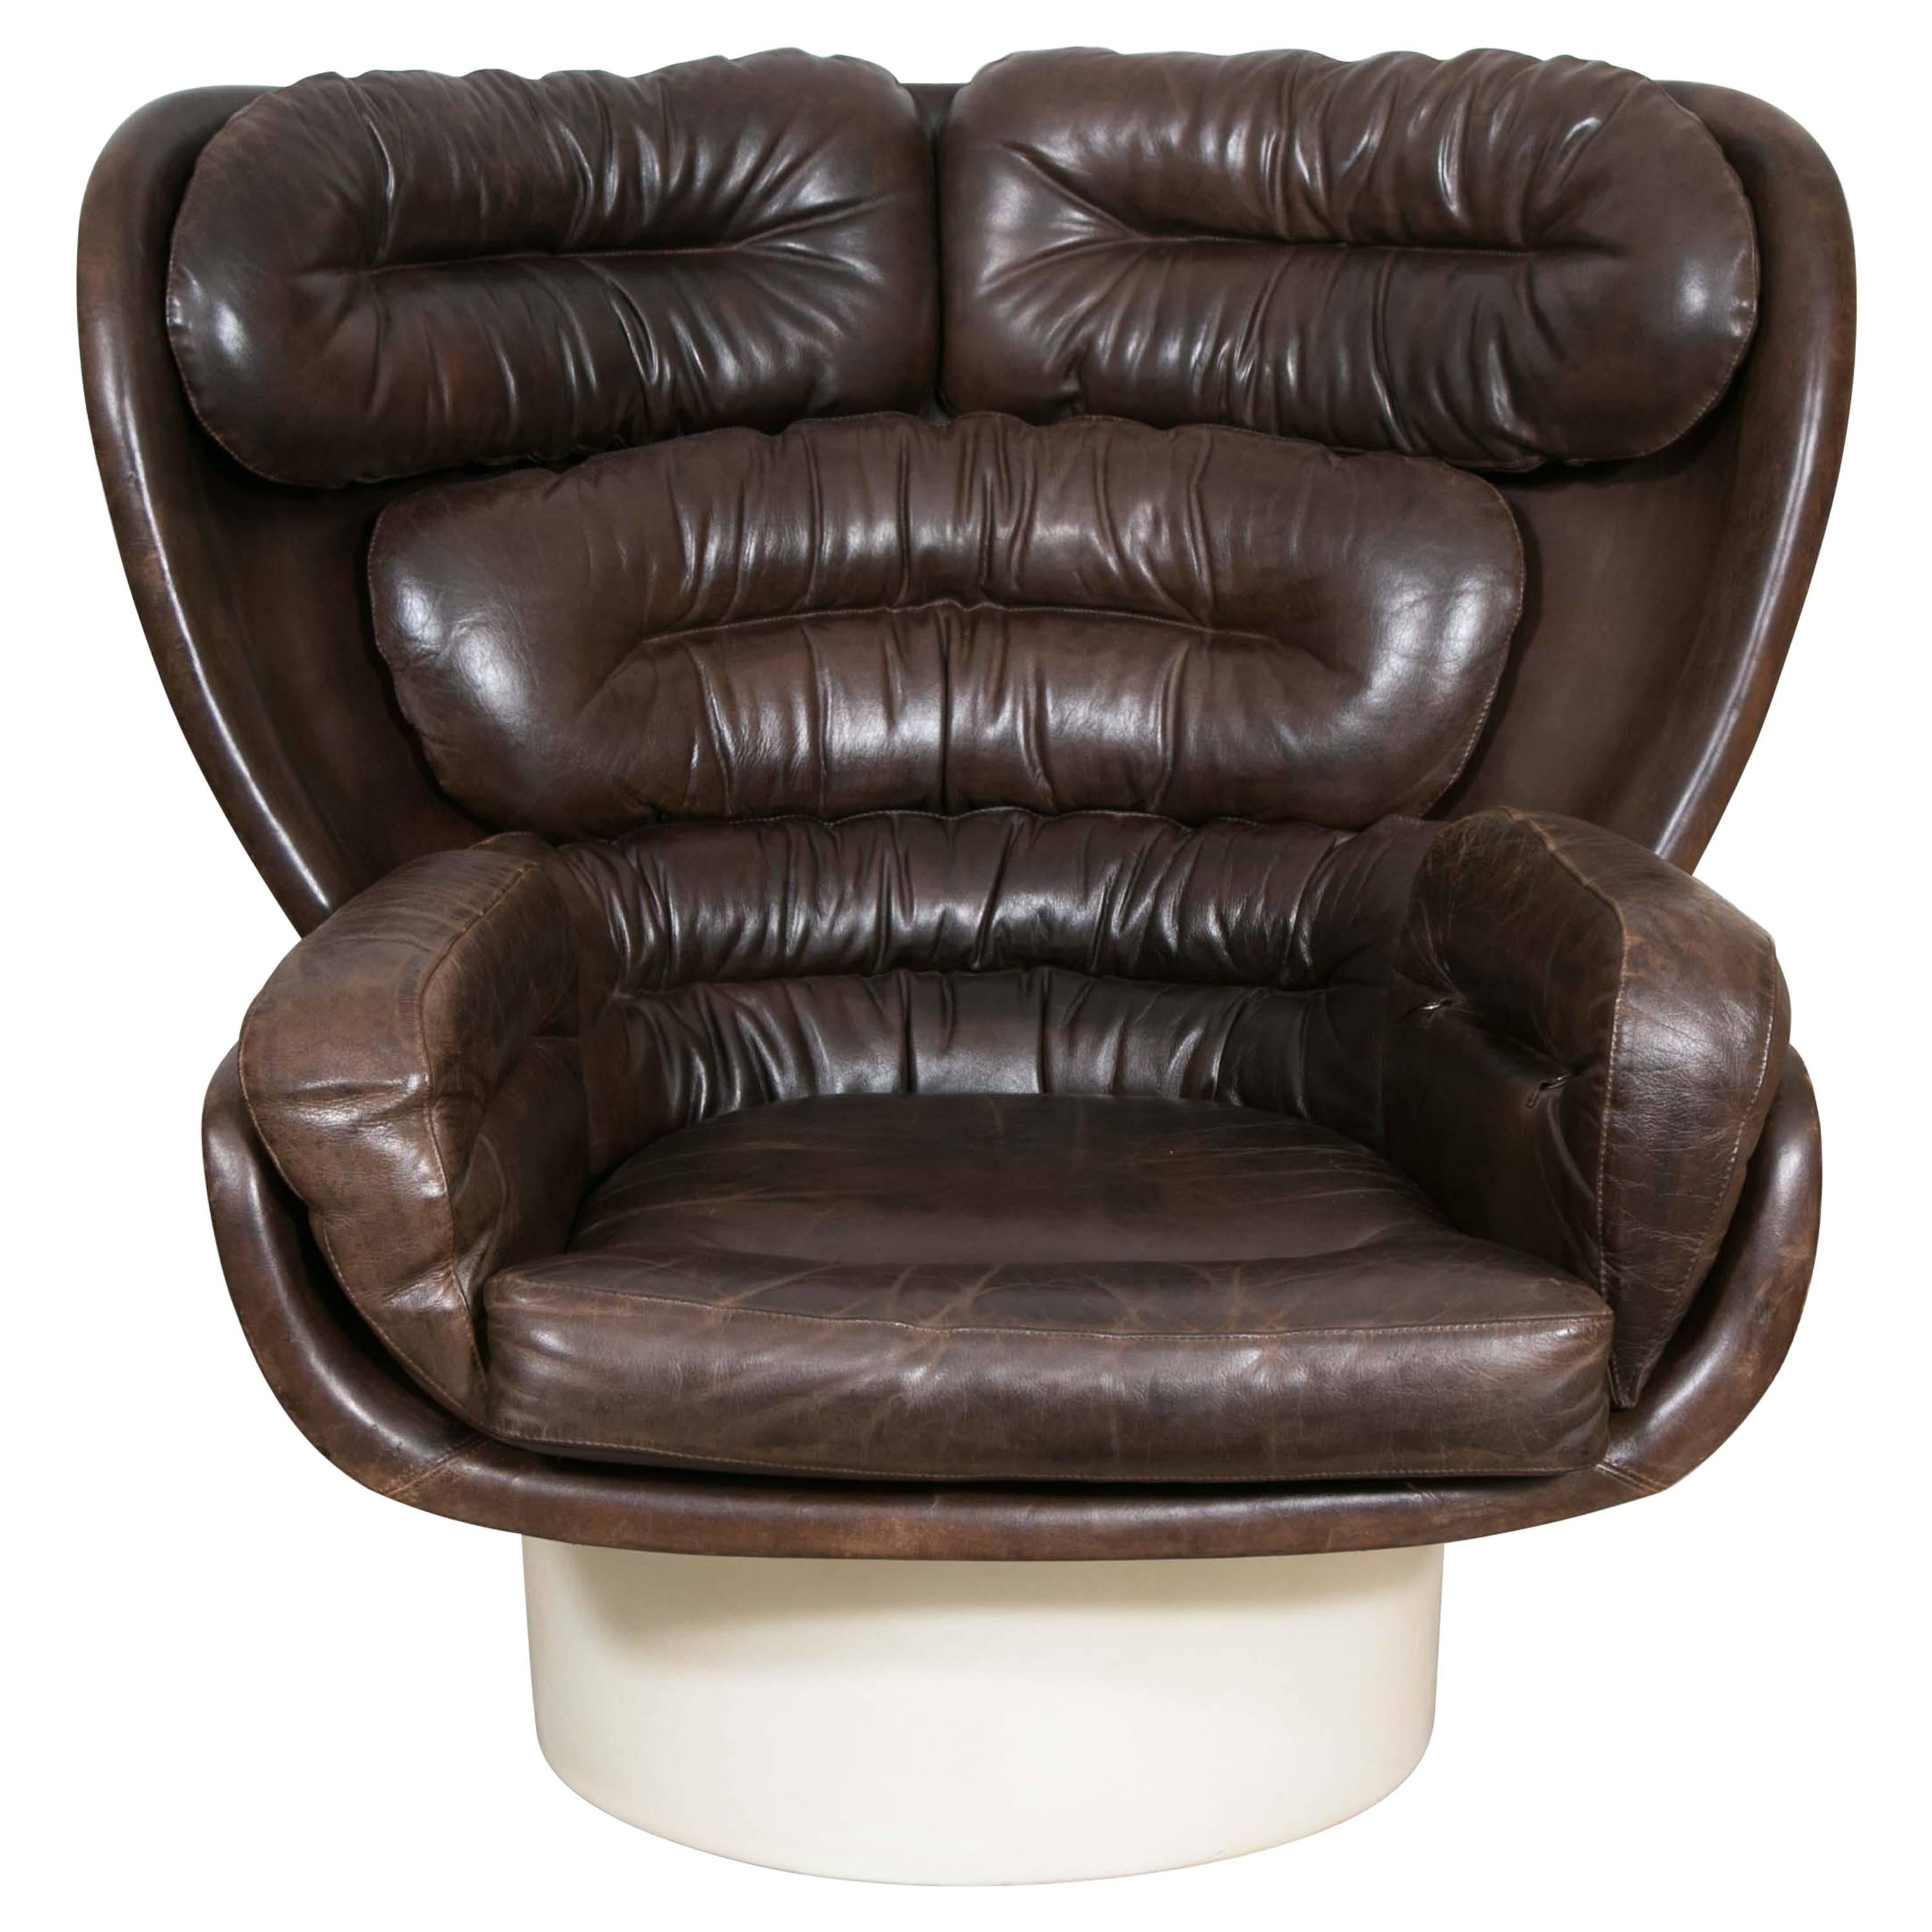 "Elda" Joe Colombo Chair For Sale